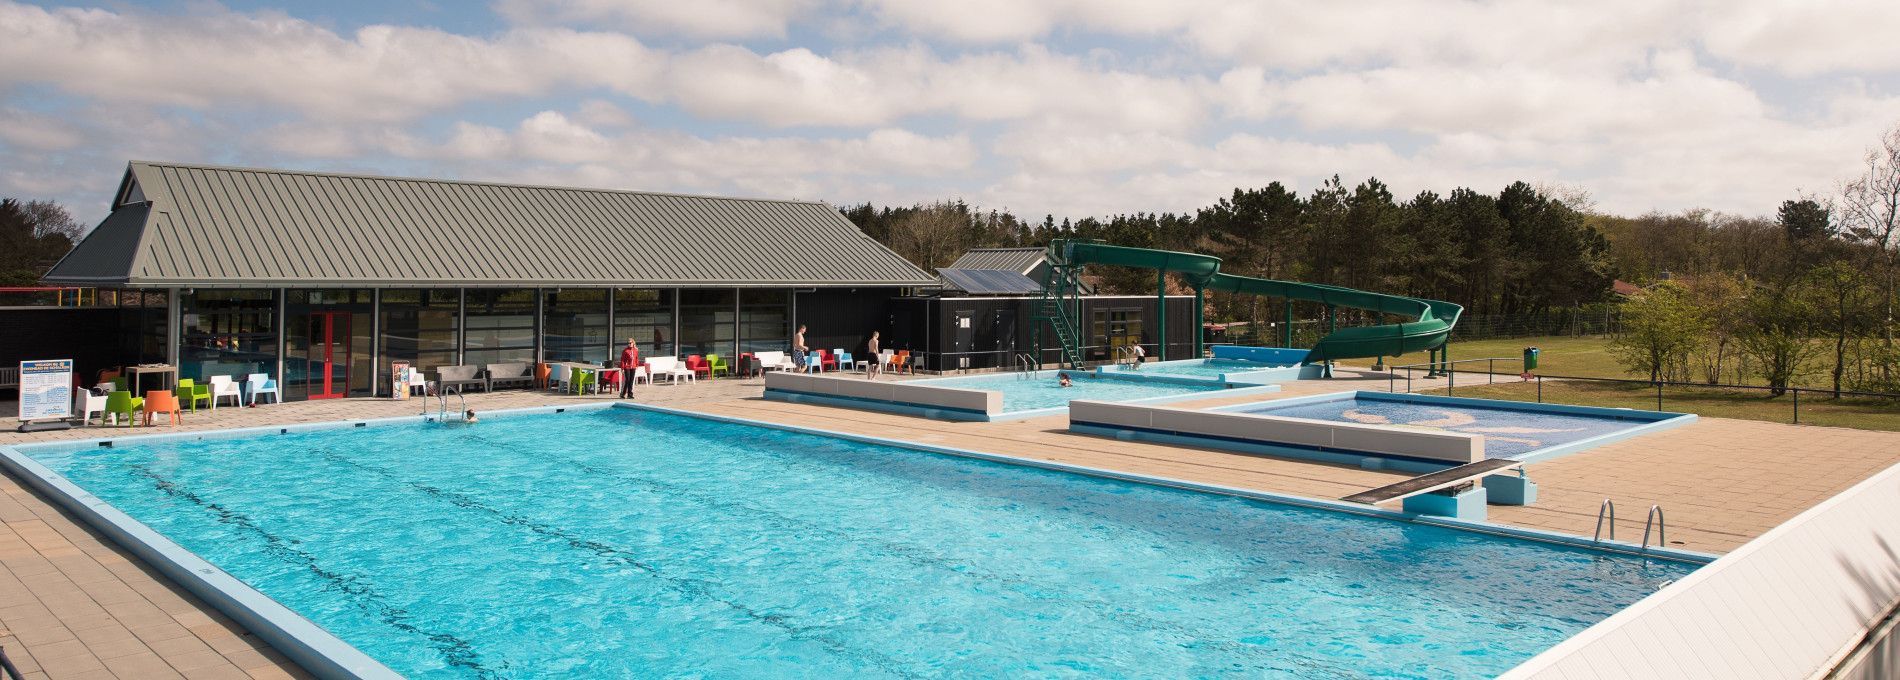 Swimming pool de Schalken - Tourist information 